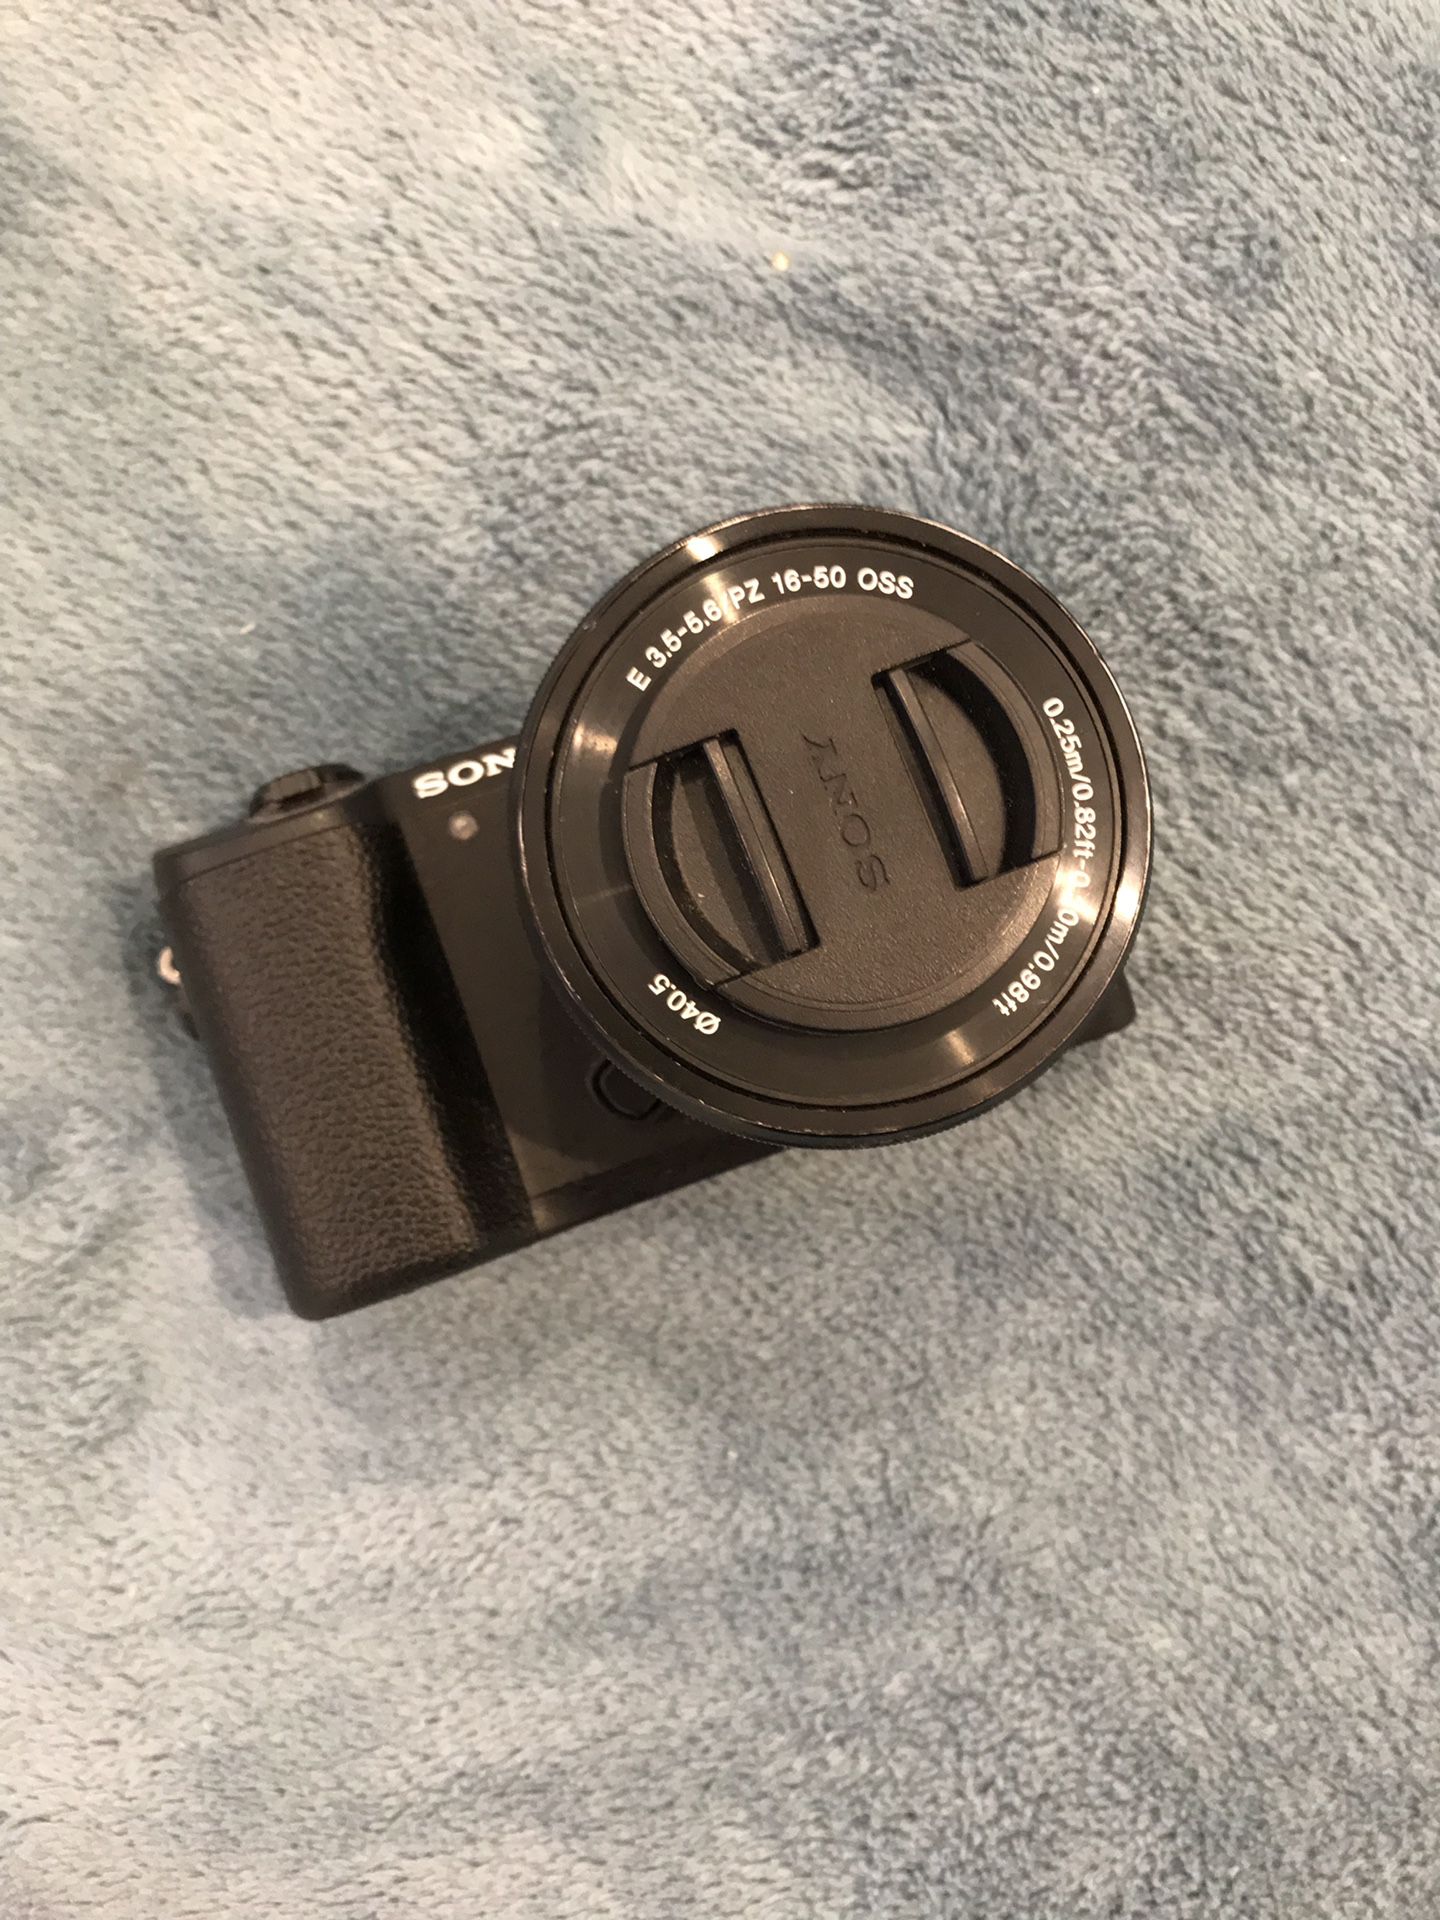 Sony a5100 mirrorless camera